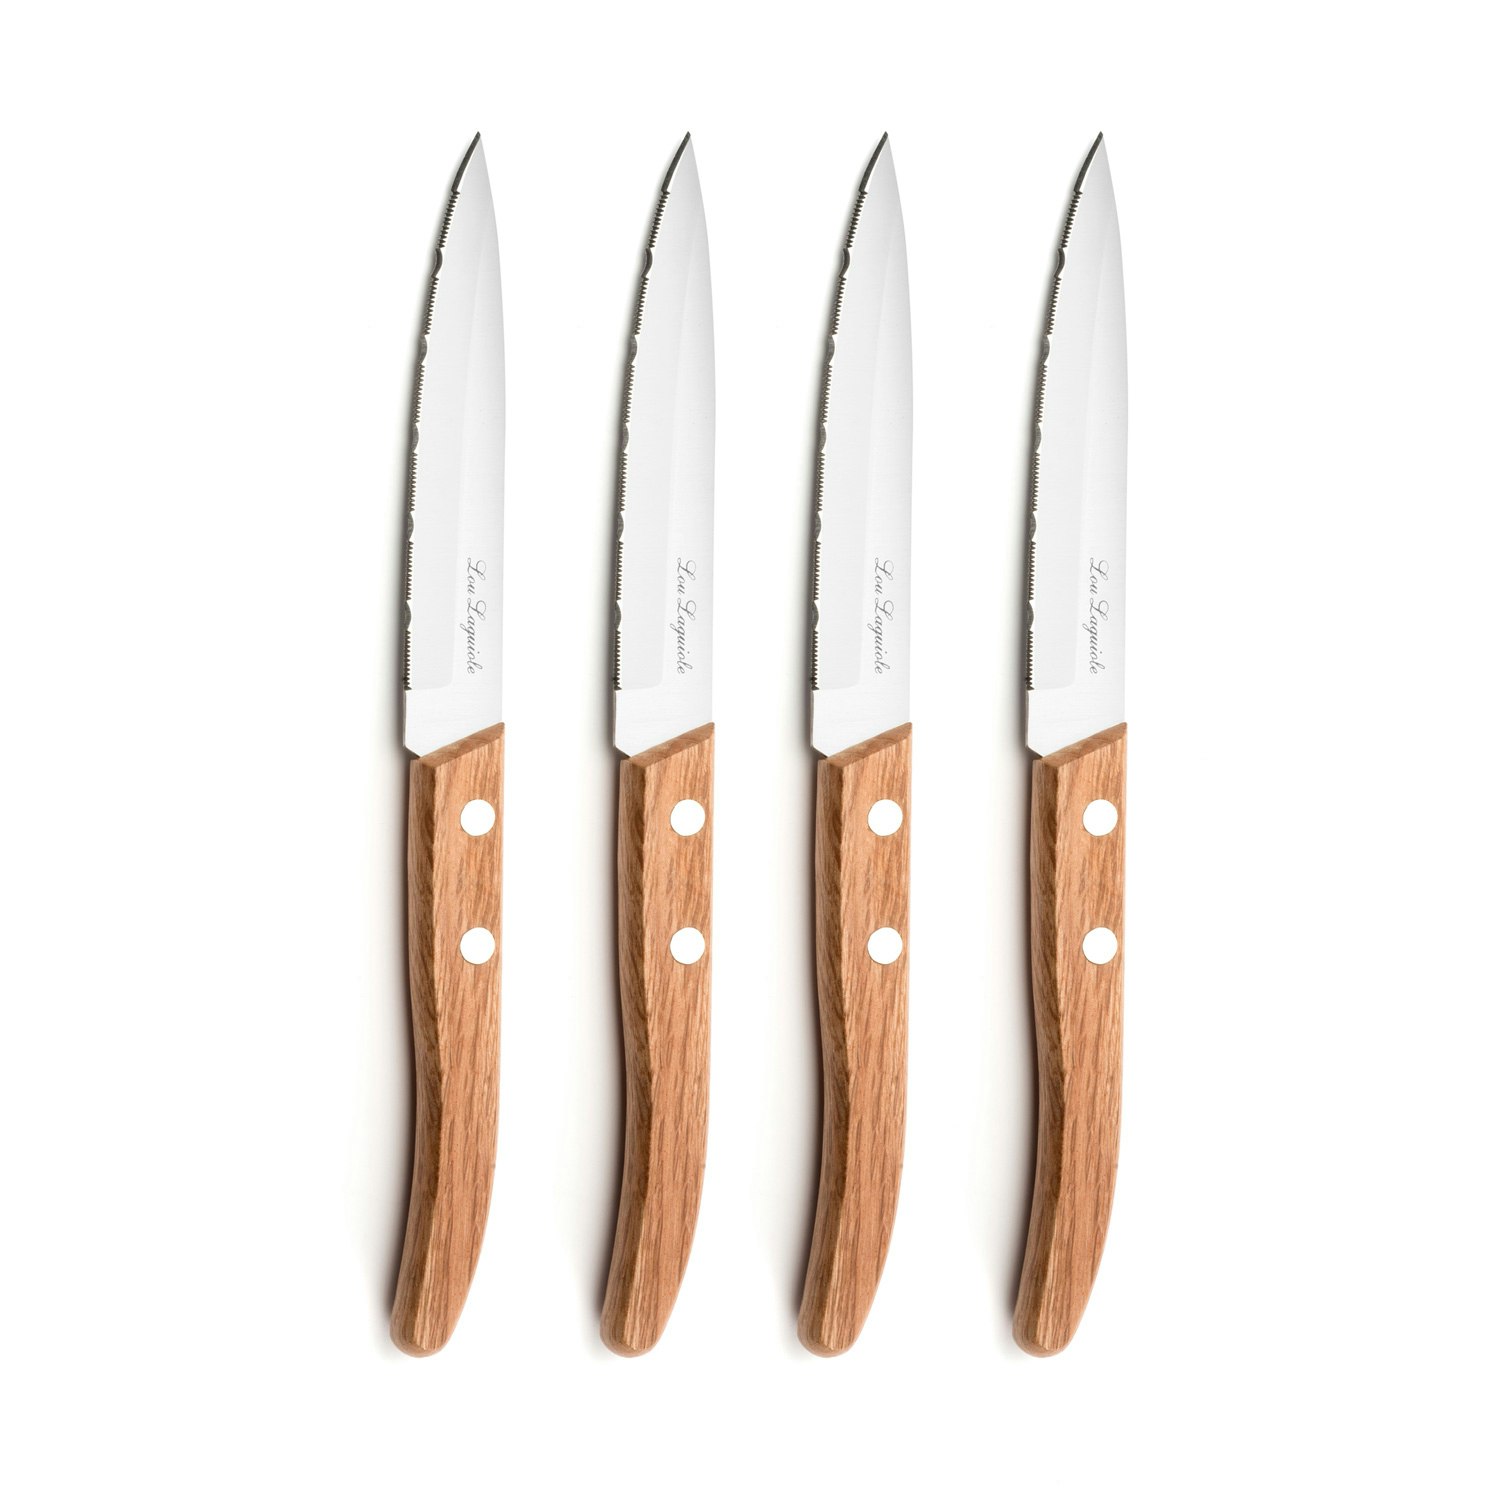 Lou Laguiole Forest Stekknivar 4-pack - Knivset Rostfritt Stål Trä